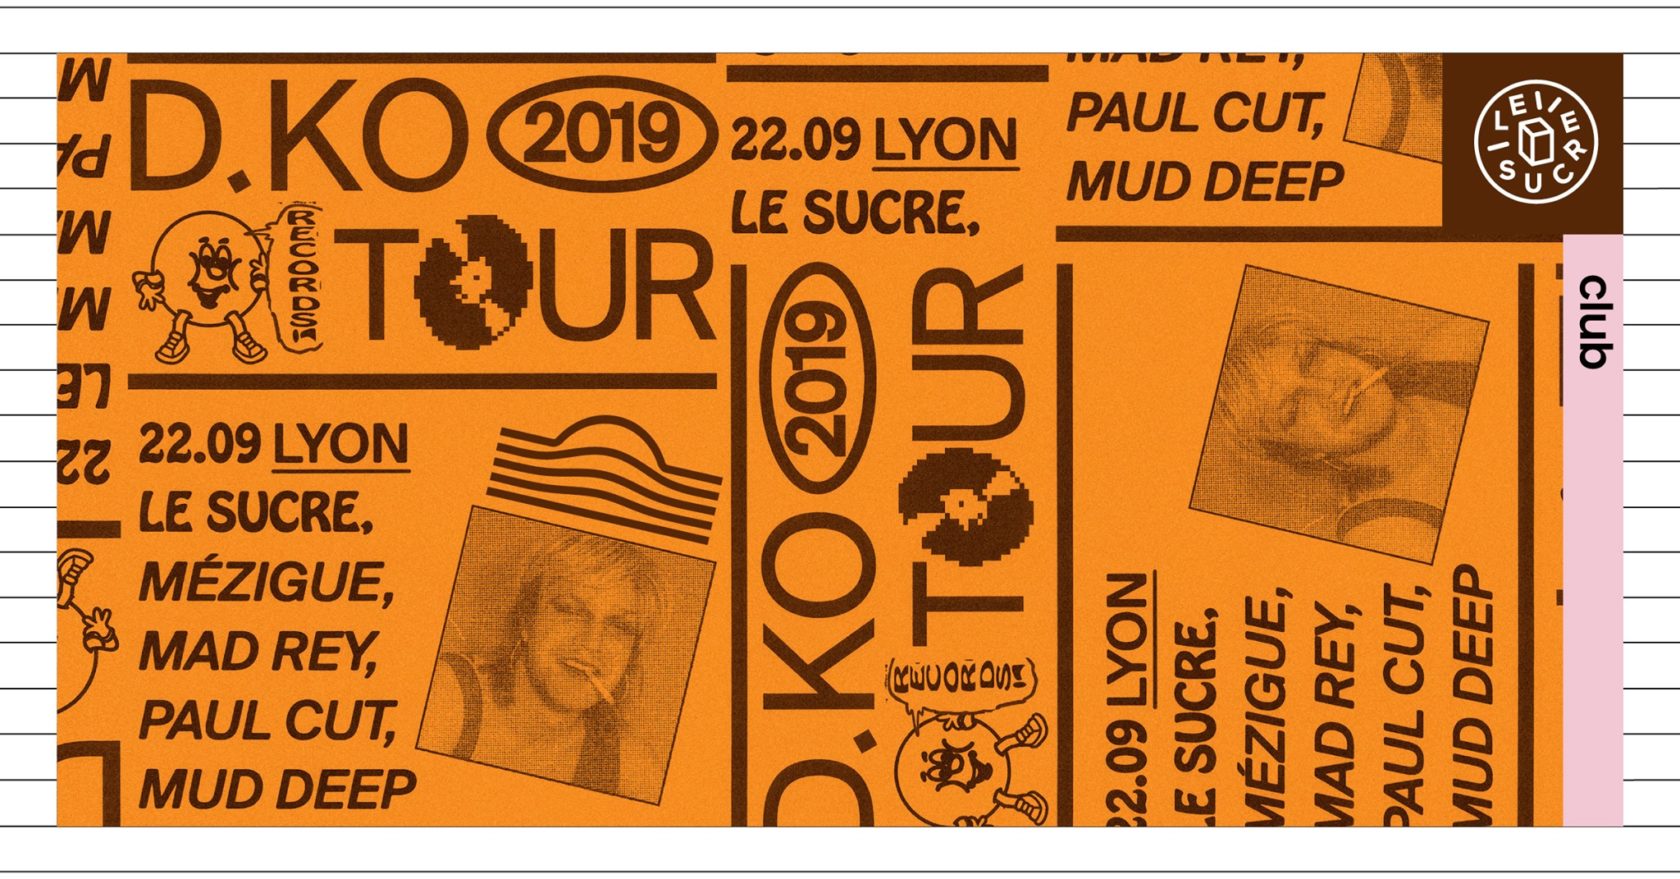 S. society x D.KO Tour : Mézigue, Mad Rey, Paul Cut, Mud Deep